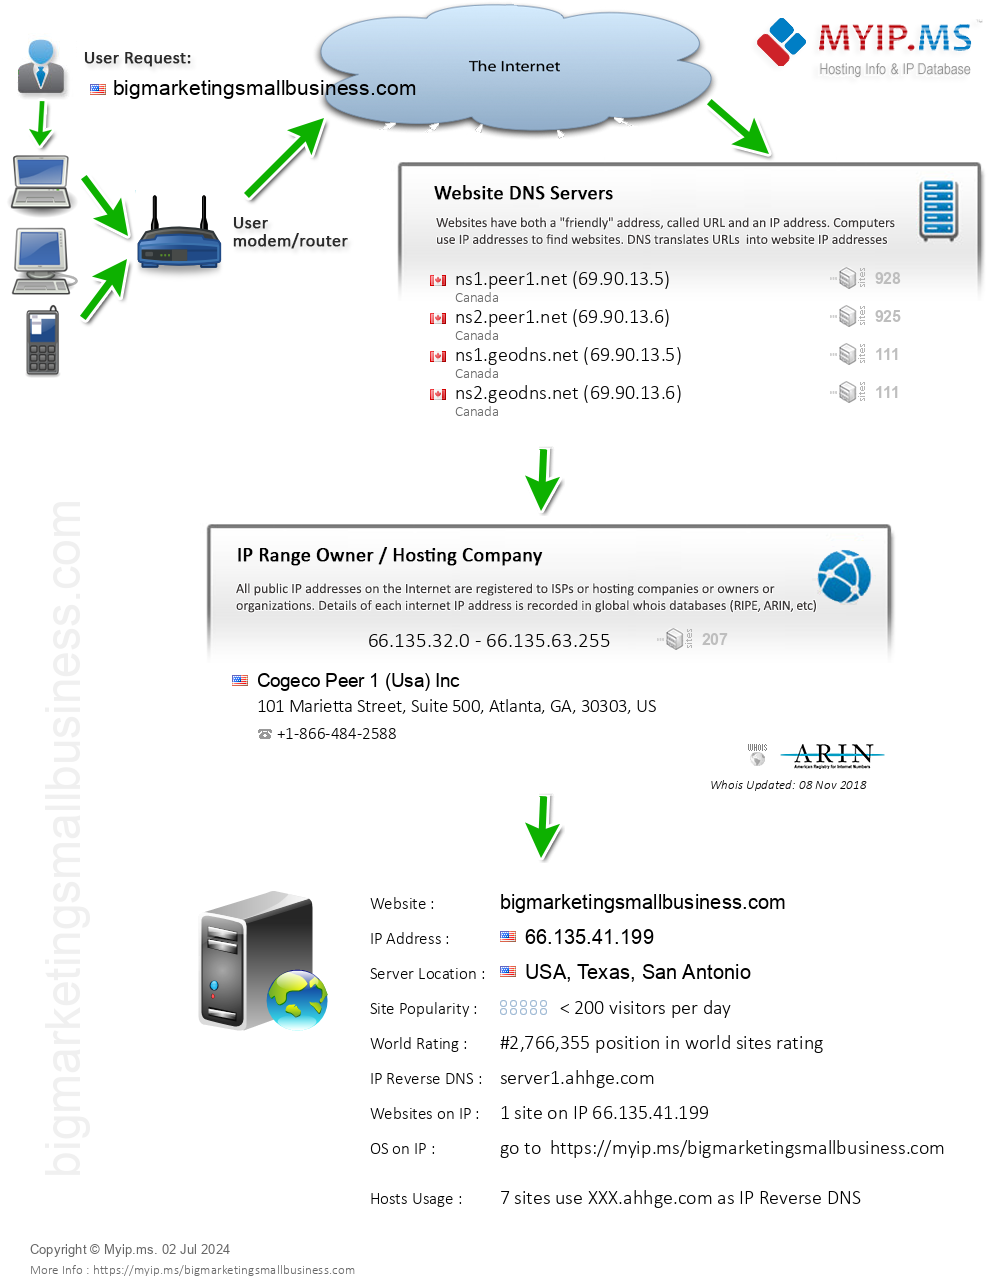 Bigmarketingsmallbusiness.com - Website Hosting Visual IP Diagram